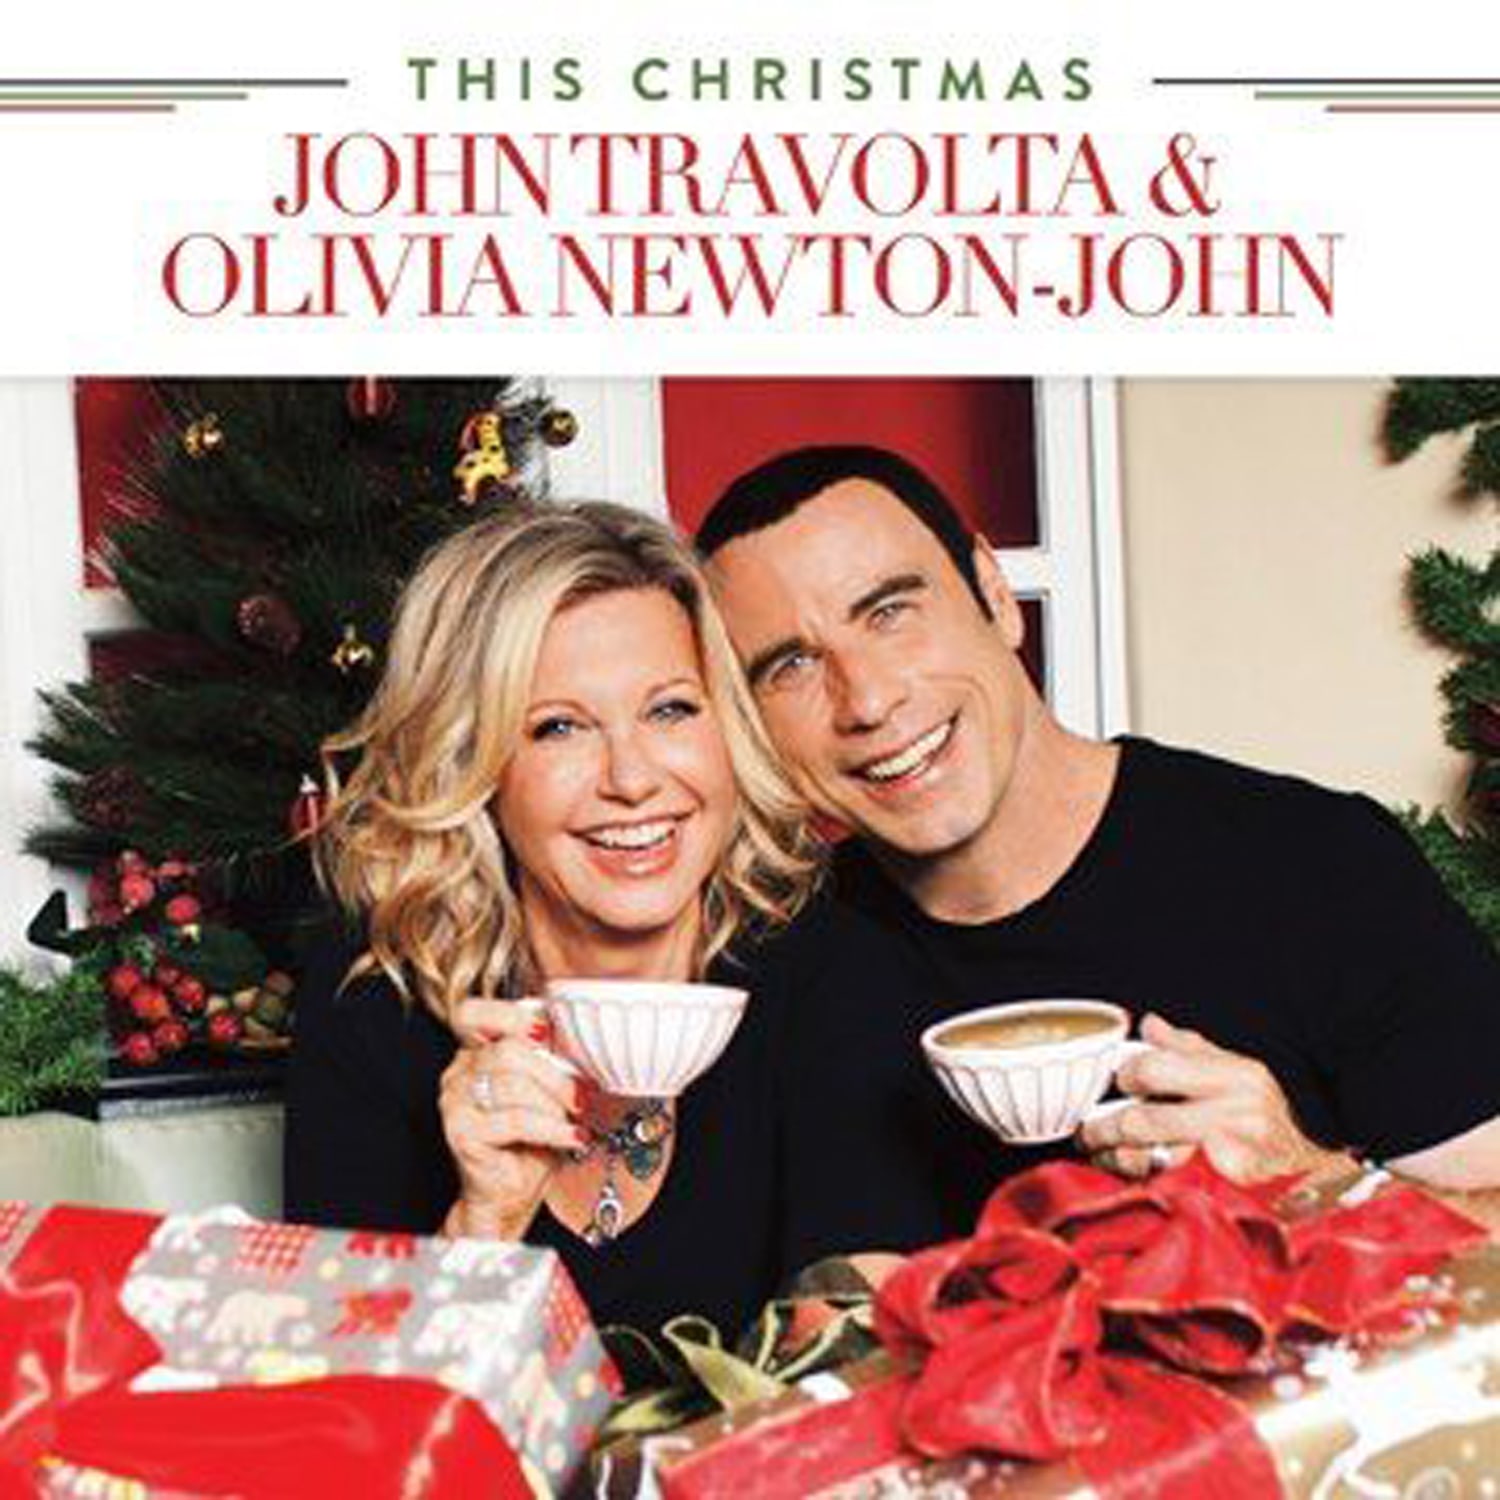 We go together! John Travolta, Olivia Newton-John reunite for